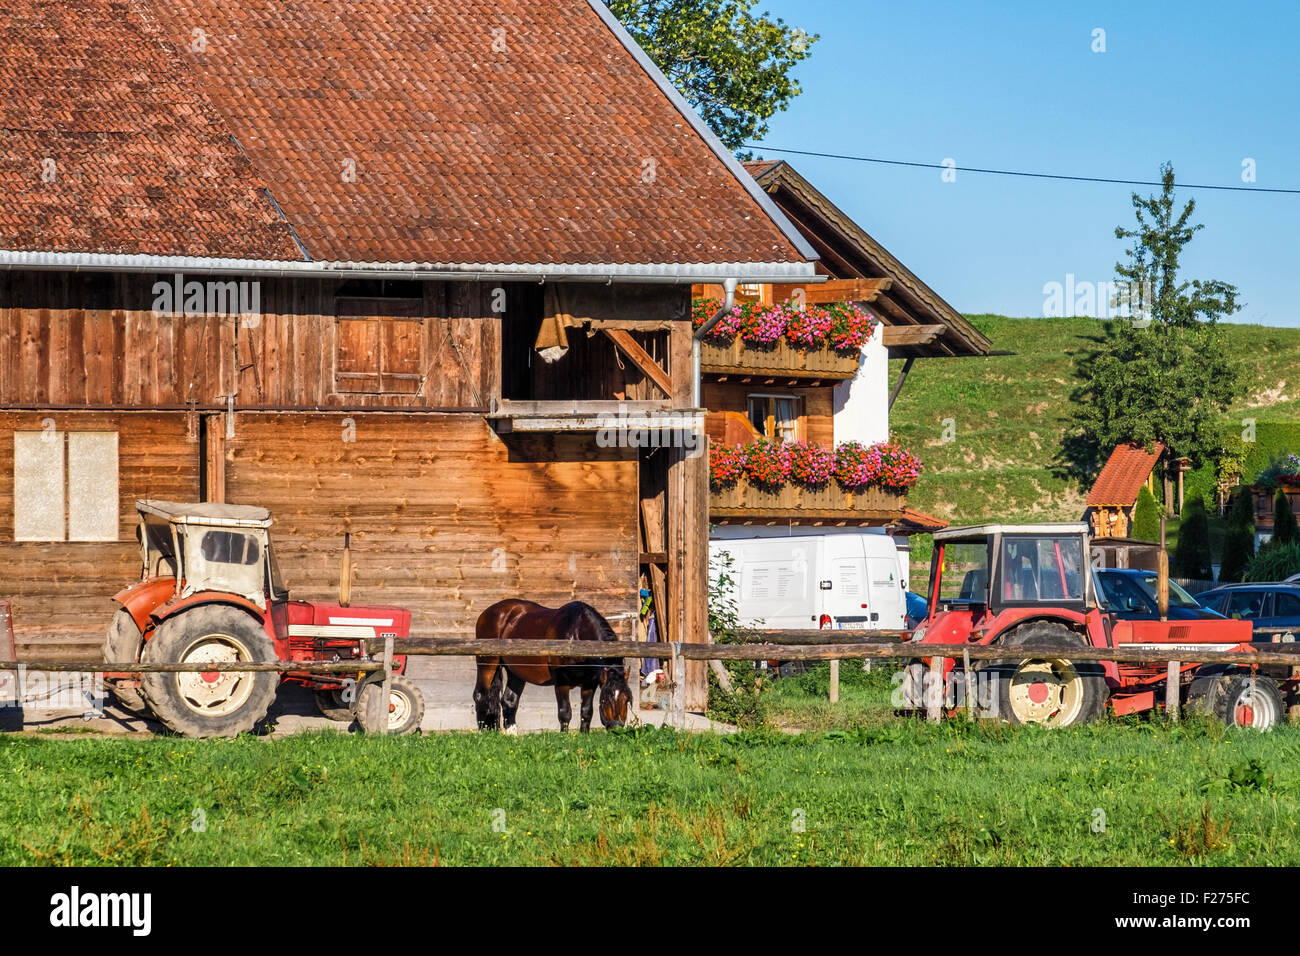 Bavaria, Germany, Farm Yard with wood barn, tractors and horse Stock Photo